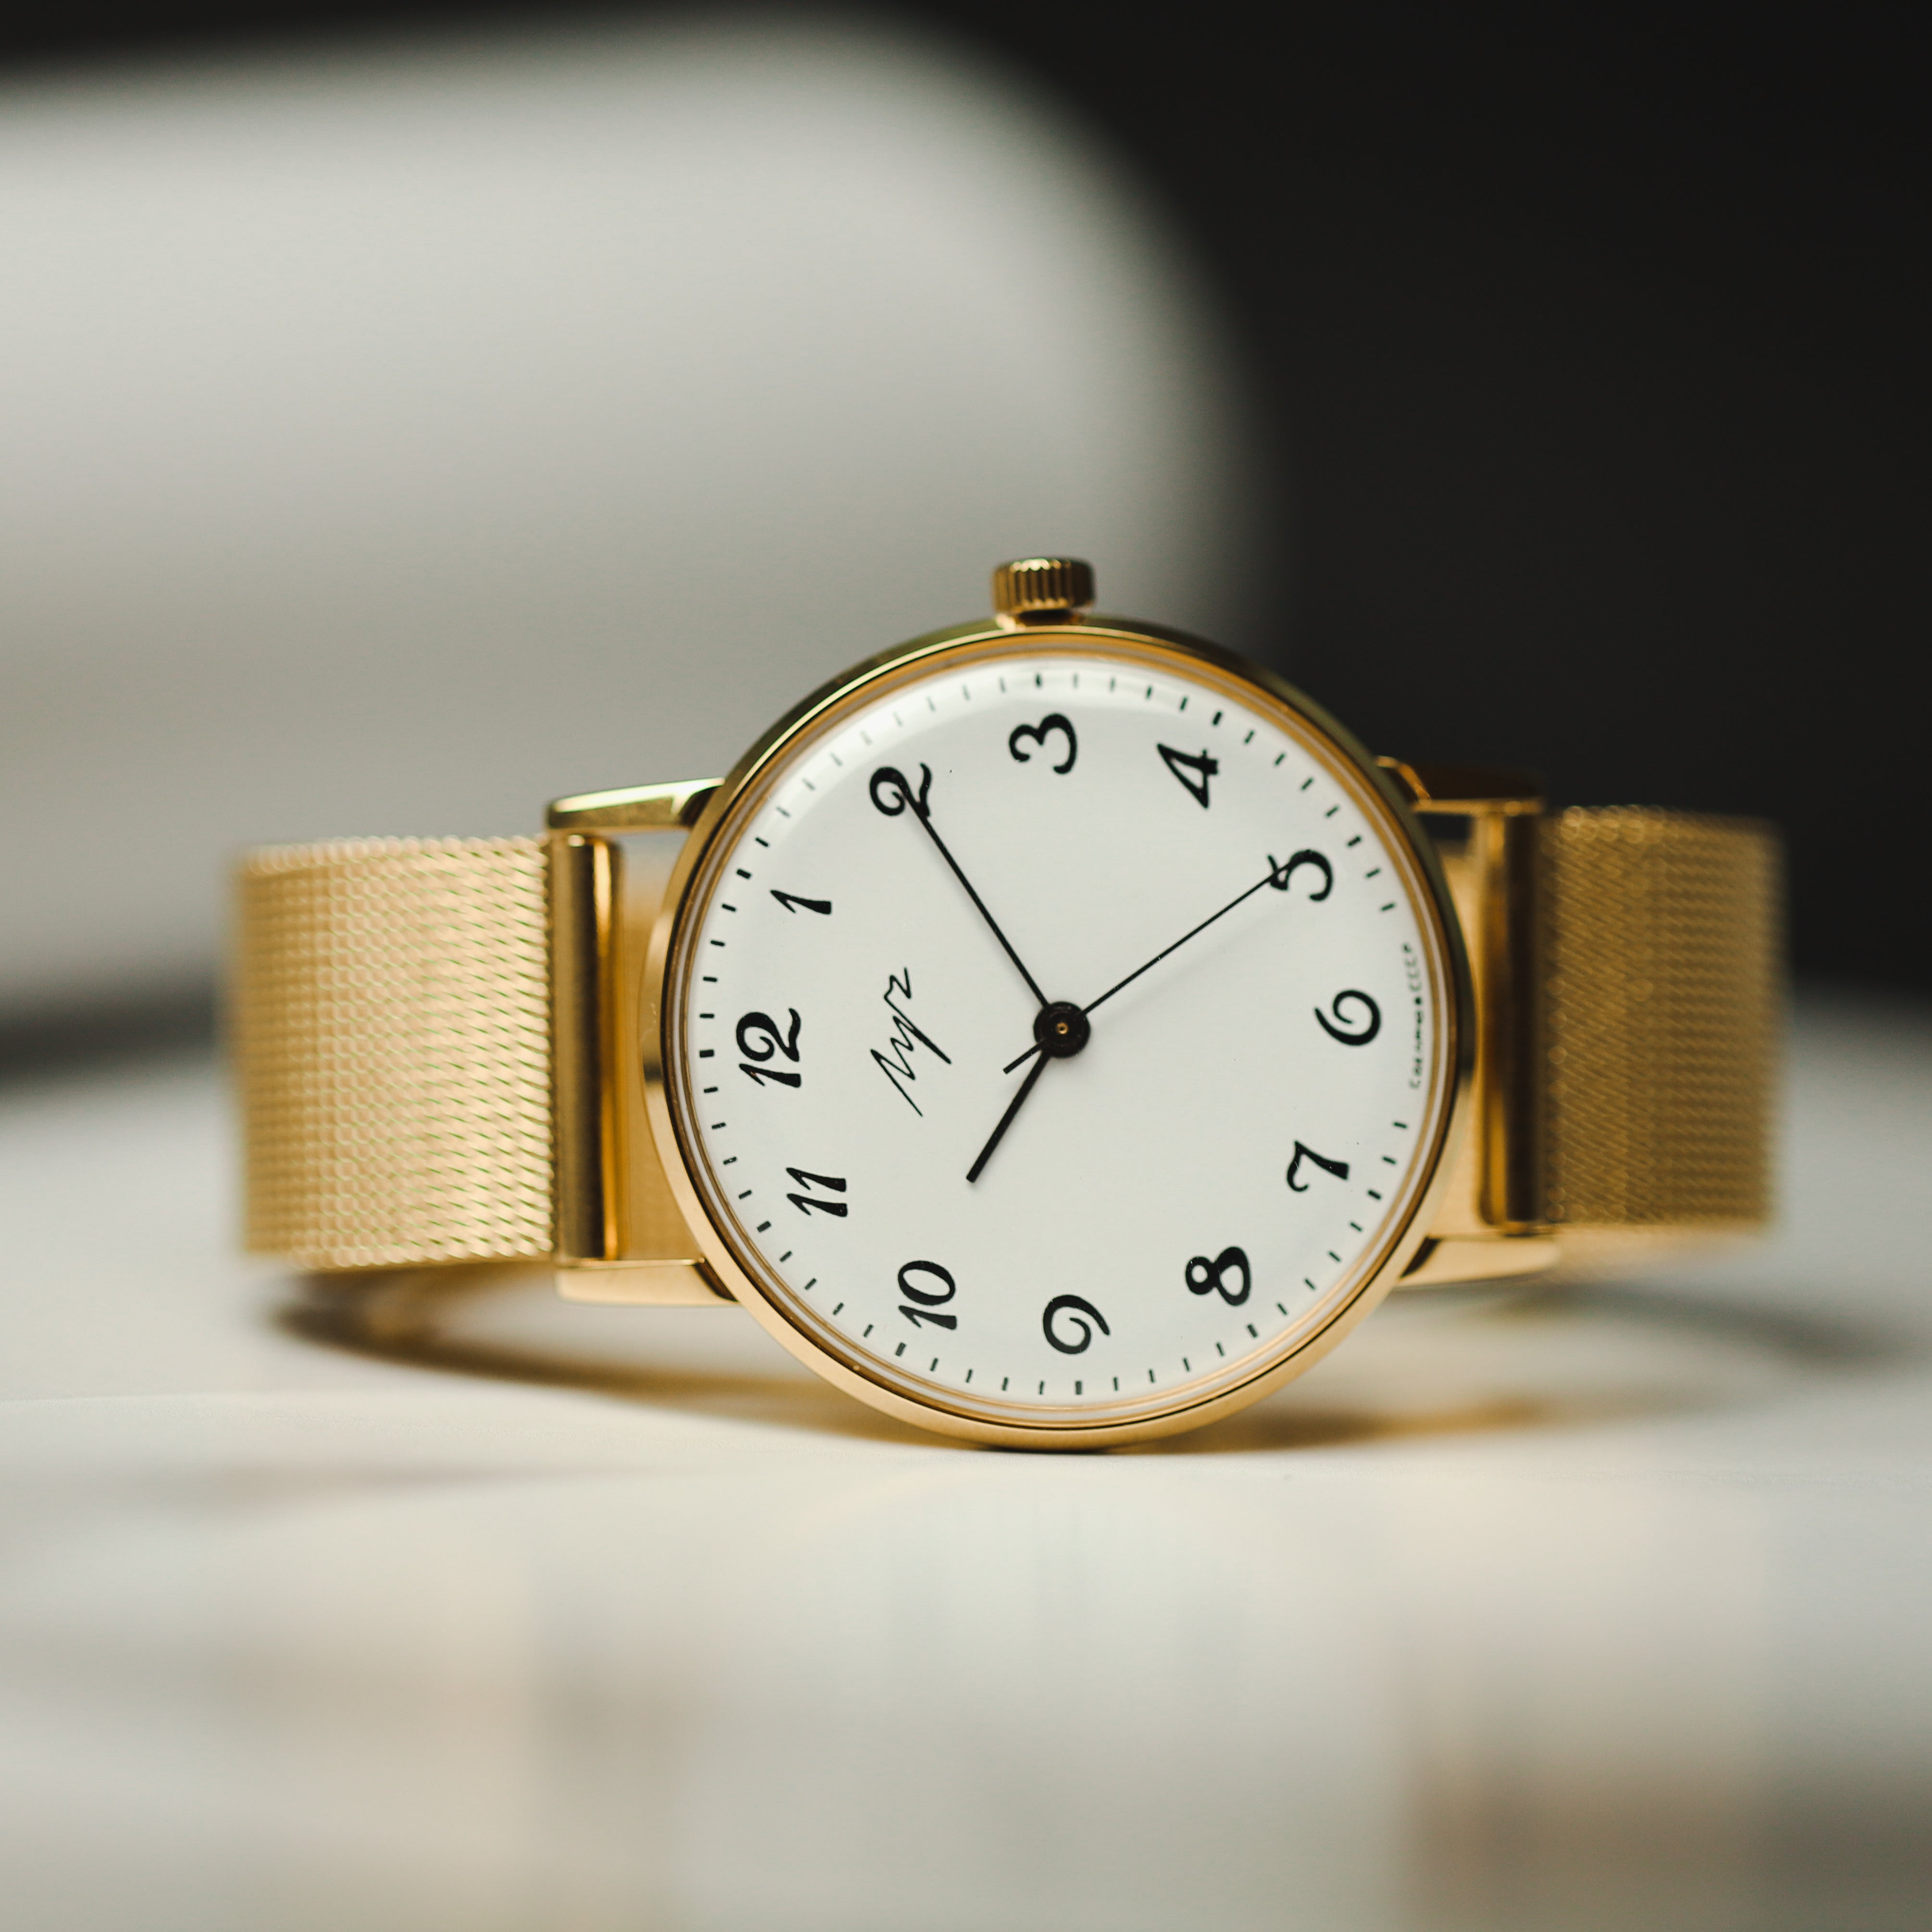 Vintage watch, Luch watch, Ultra rare watch, Wrist watches for men, watch vintage, Mechanical watch, Retro watch, Russian watch, men watch